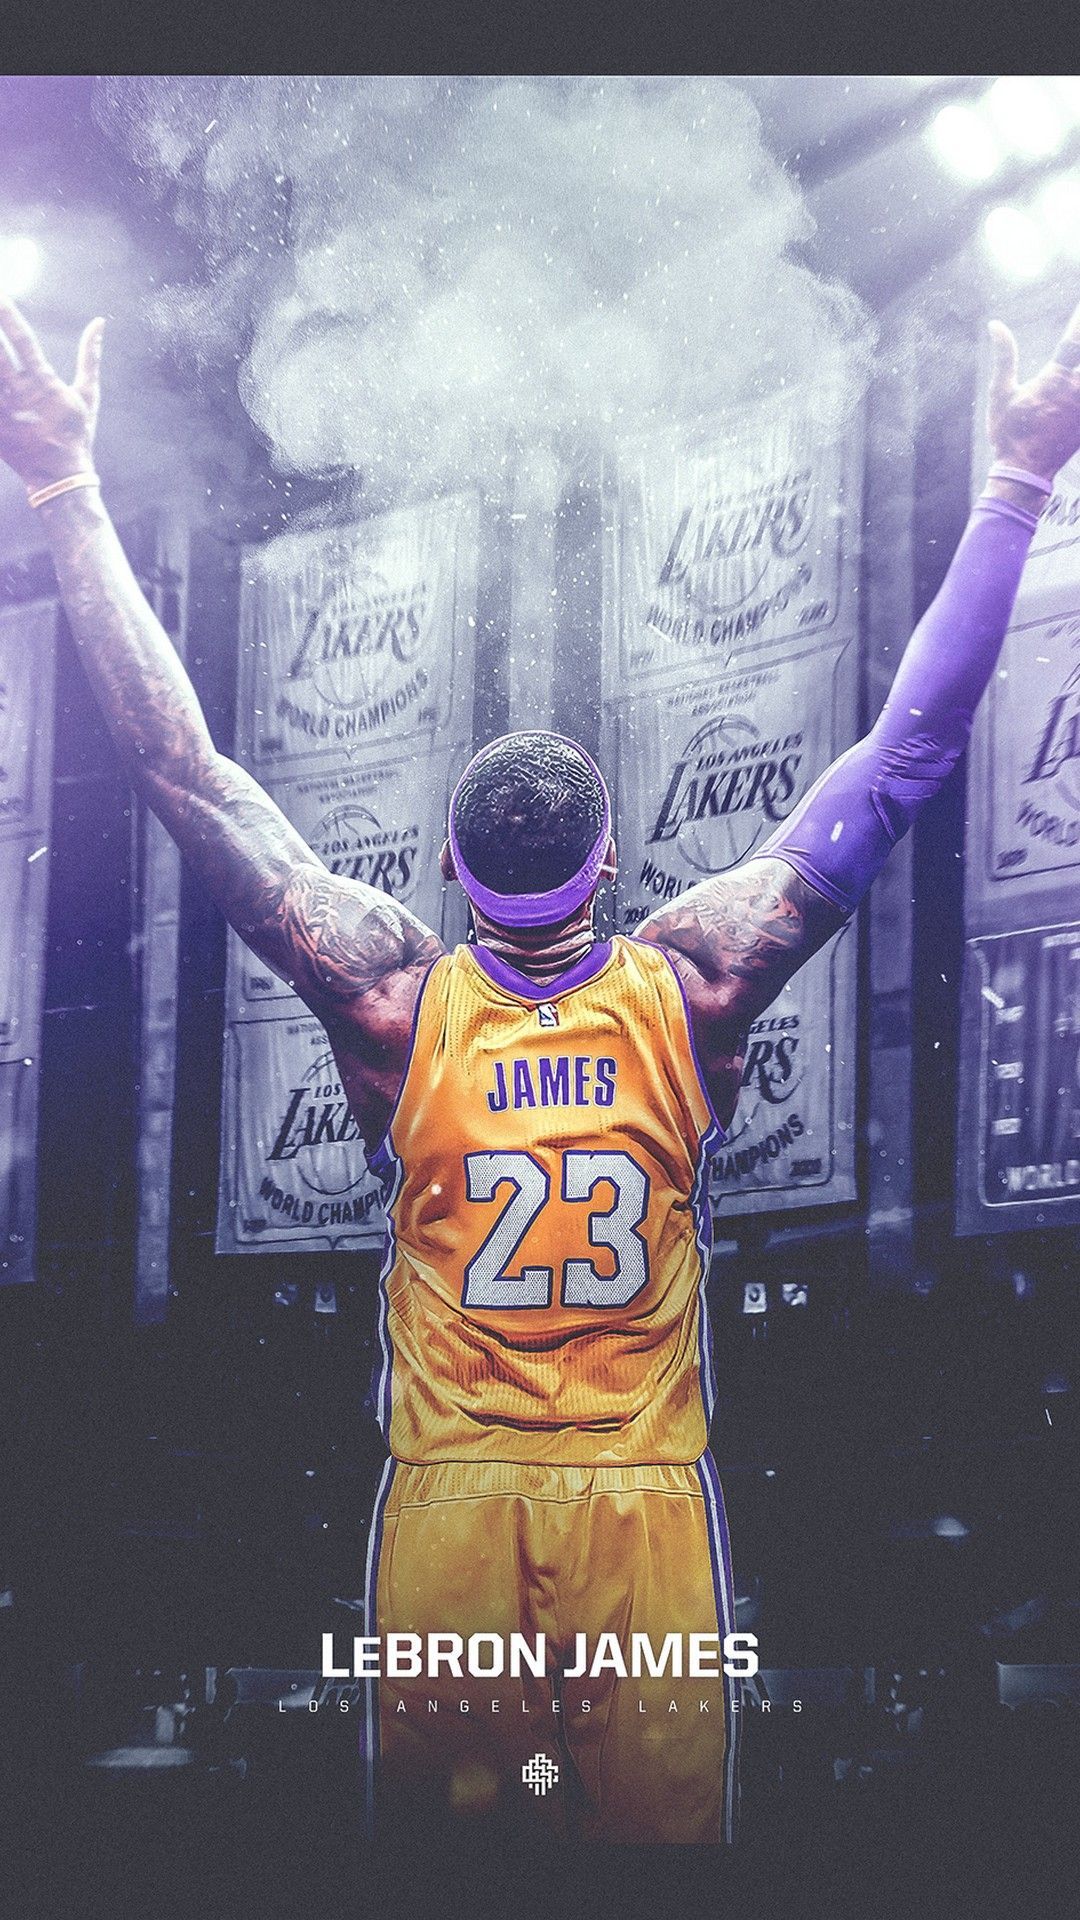 LeBron James LA Lakers HD Wallpaper For iPhone Basketball Wallpaper. Basketball wallpaper hd, Lebron james poster, Lebron james wallpaper